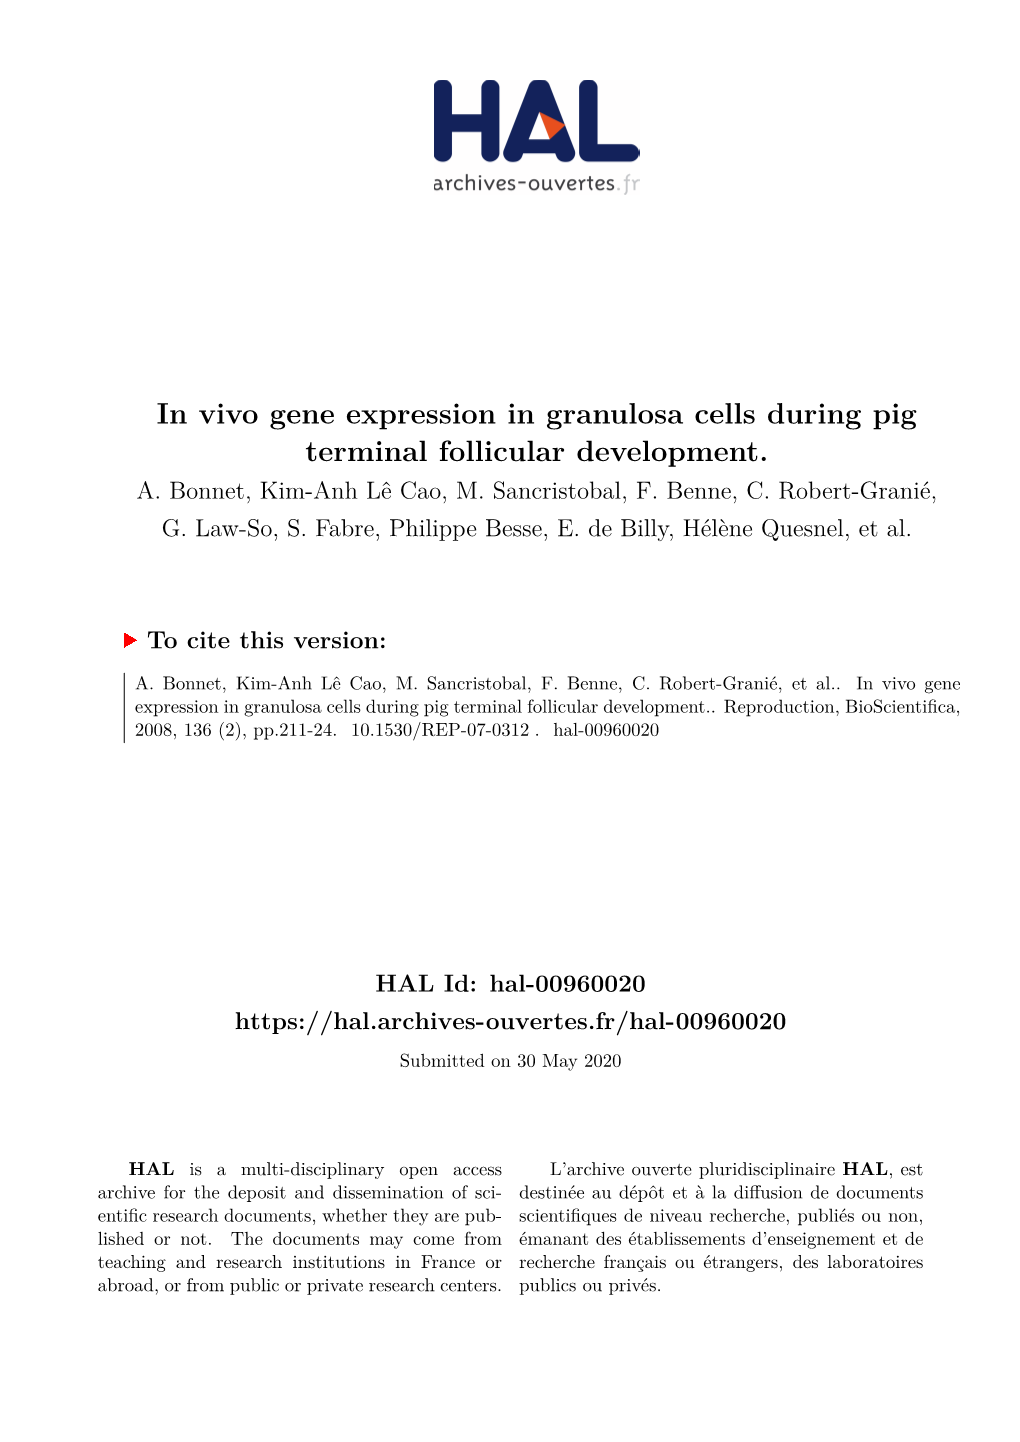 In Vivo Gene Expression in Granulosa Cells During Pig Terminal Follicular Development. A